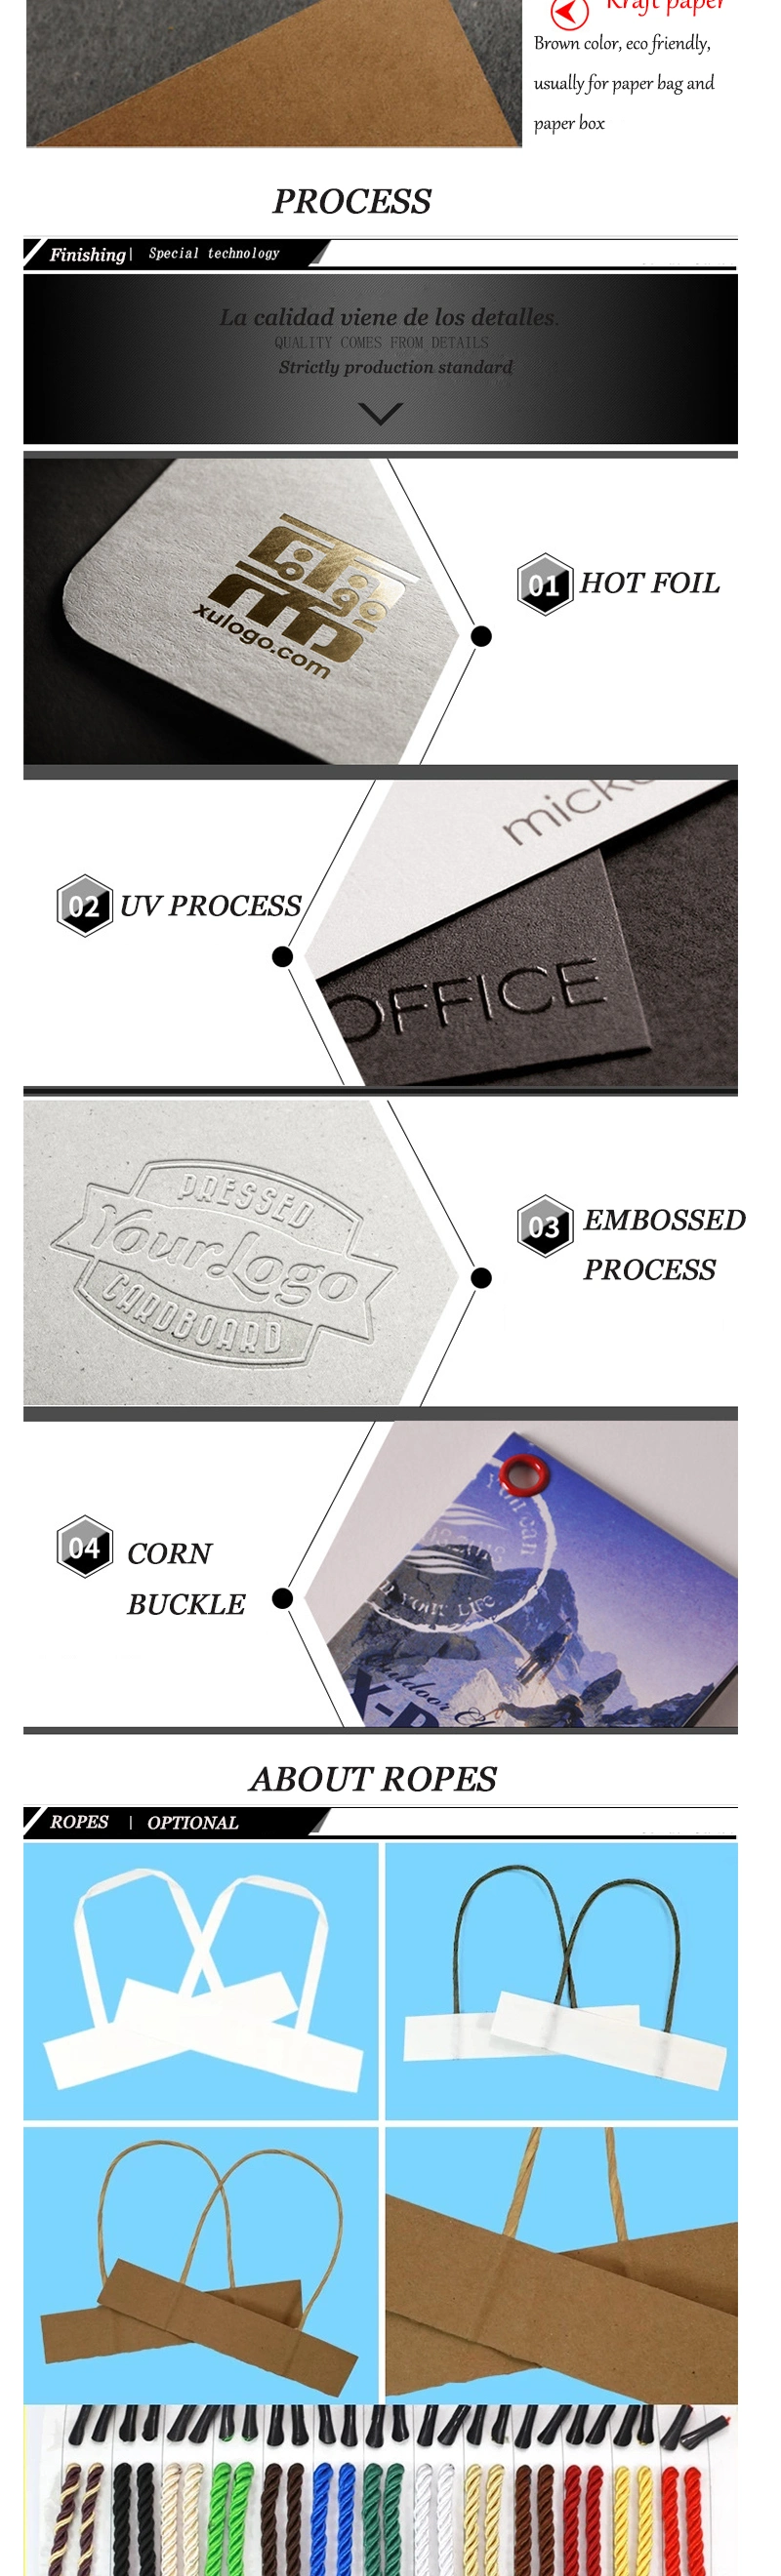 Custom Logo Printing Document Bag Business Files Storage Paper Bags